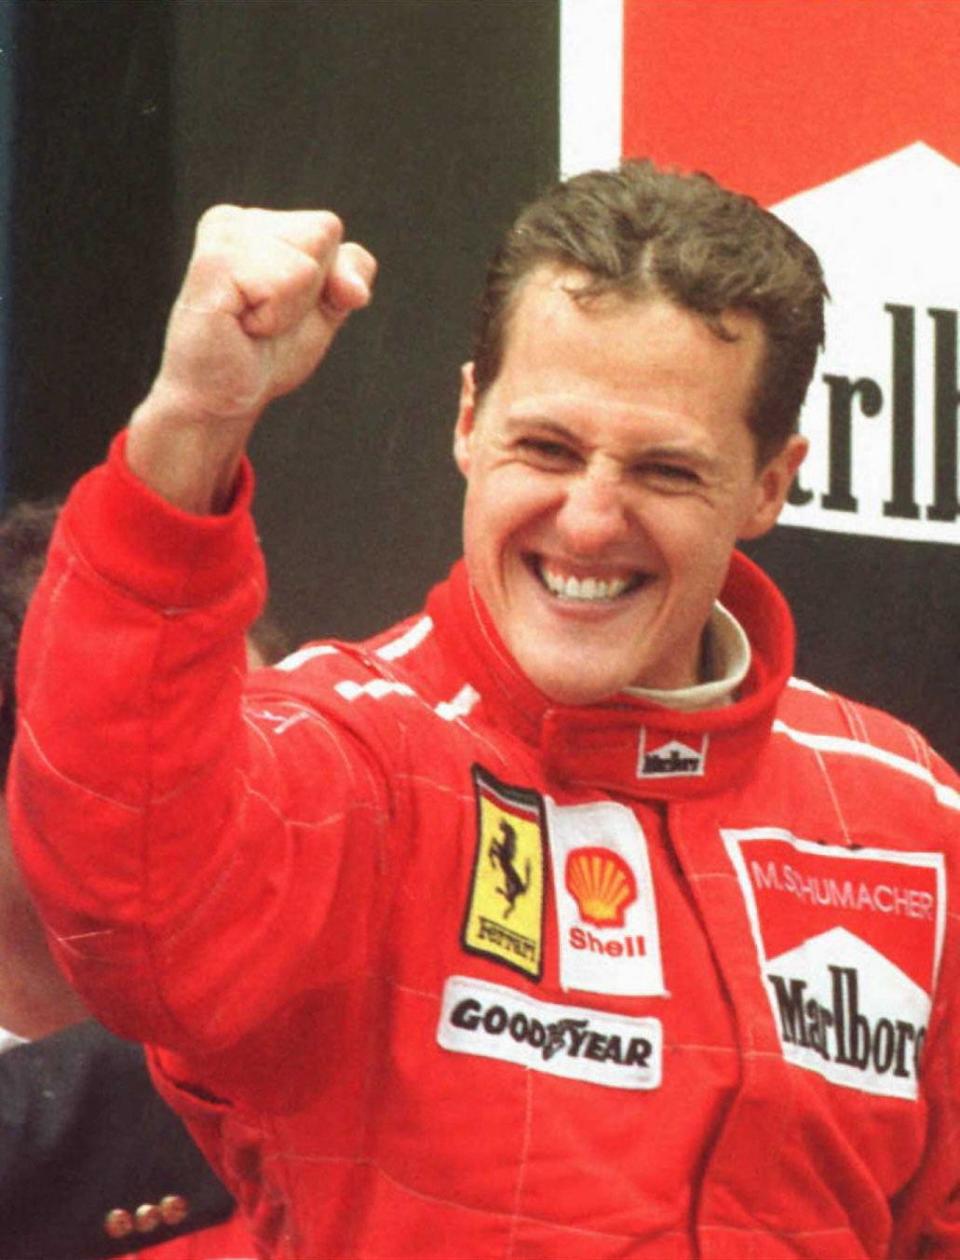 Top three races of Michael Schumacher's career on legend's 55th ...